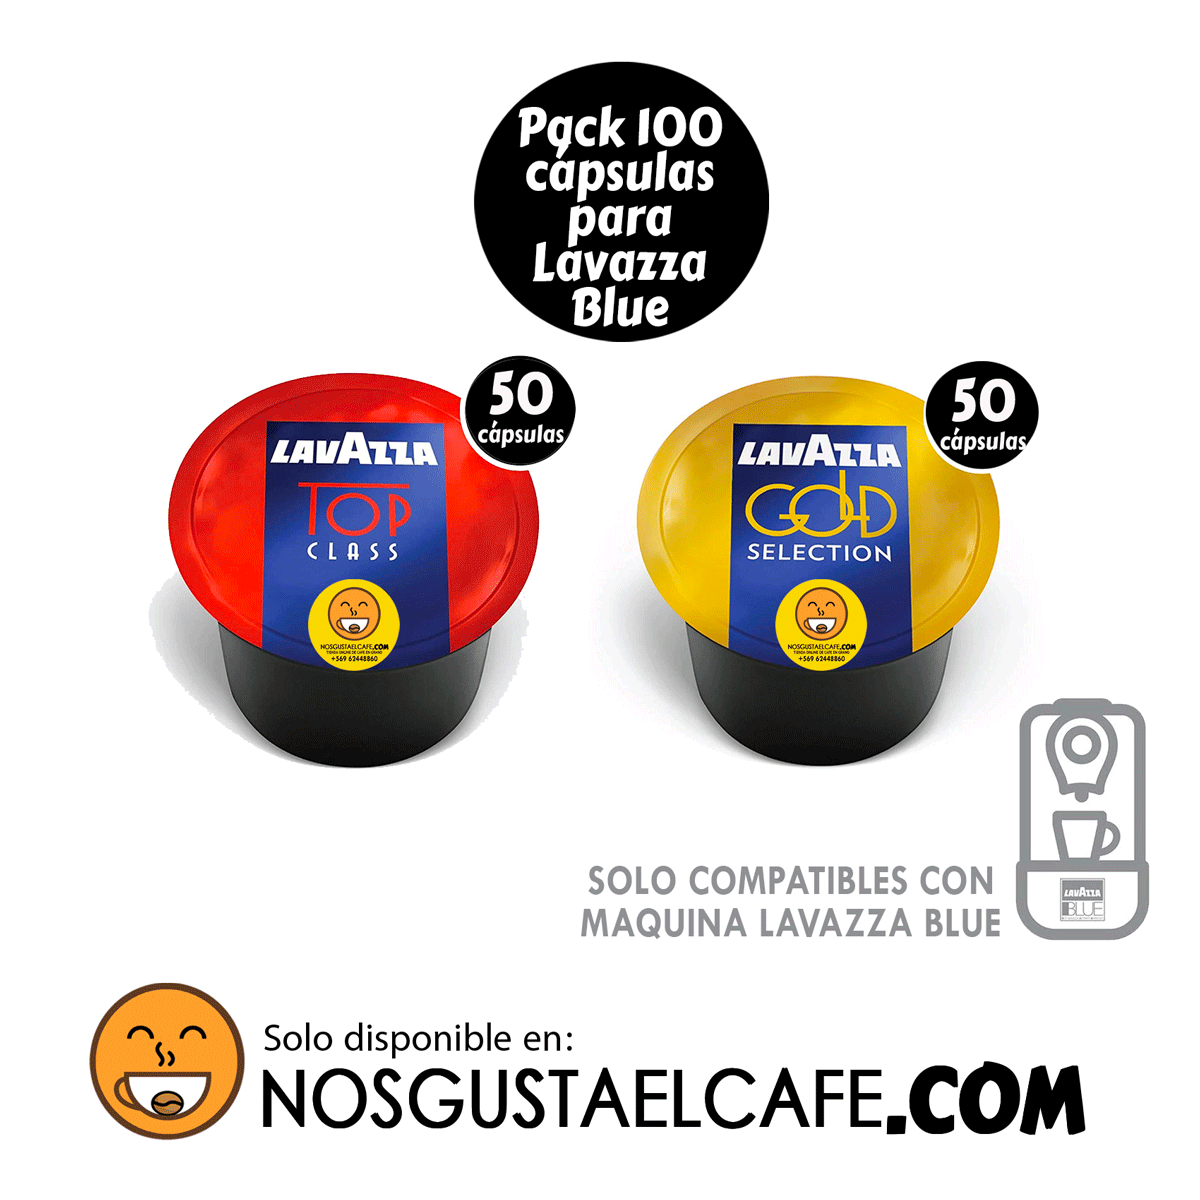 https://nosgustaelcafe.com/wp-content/uploads/2022/04/Pack-100-capsulas-Lavazza-Blue-nosgustaelcafe.png